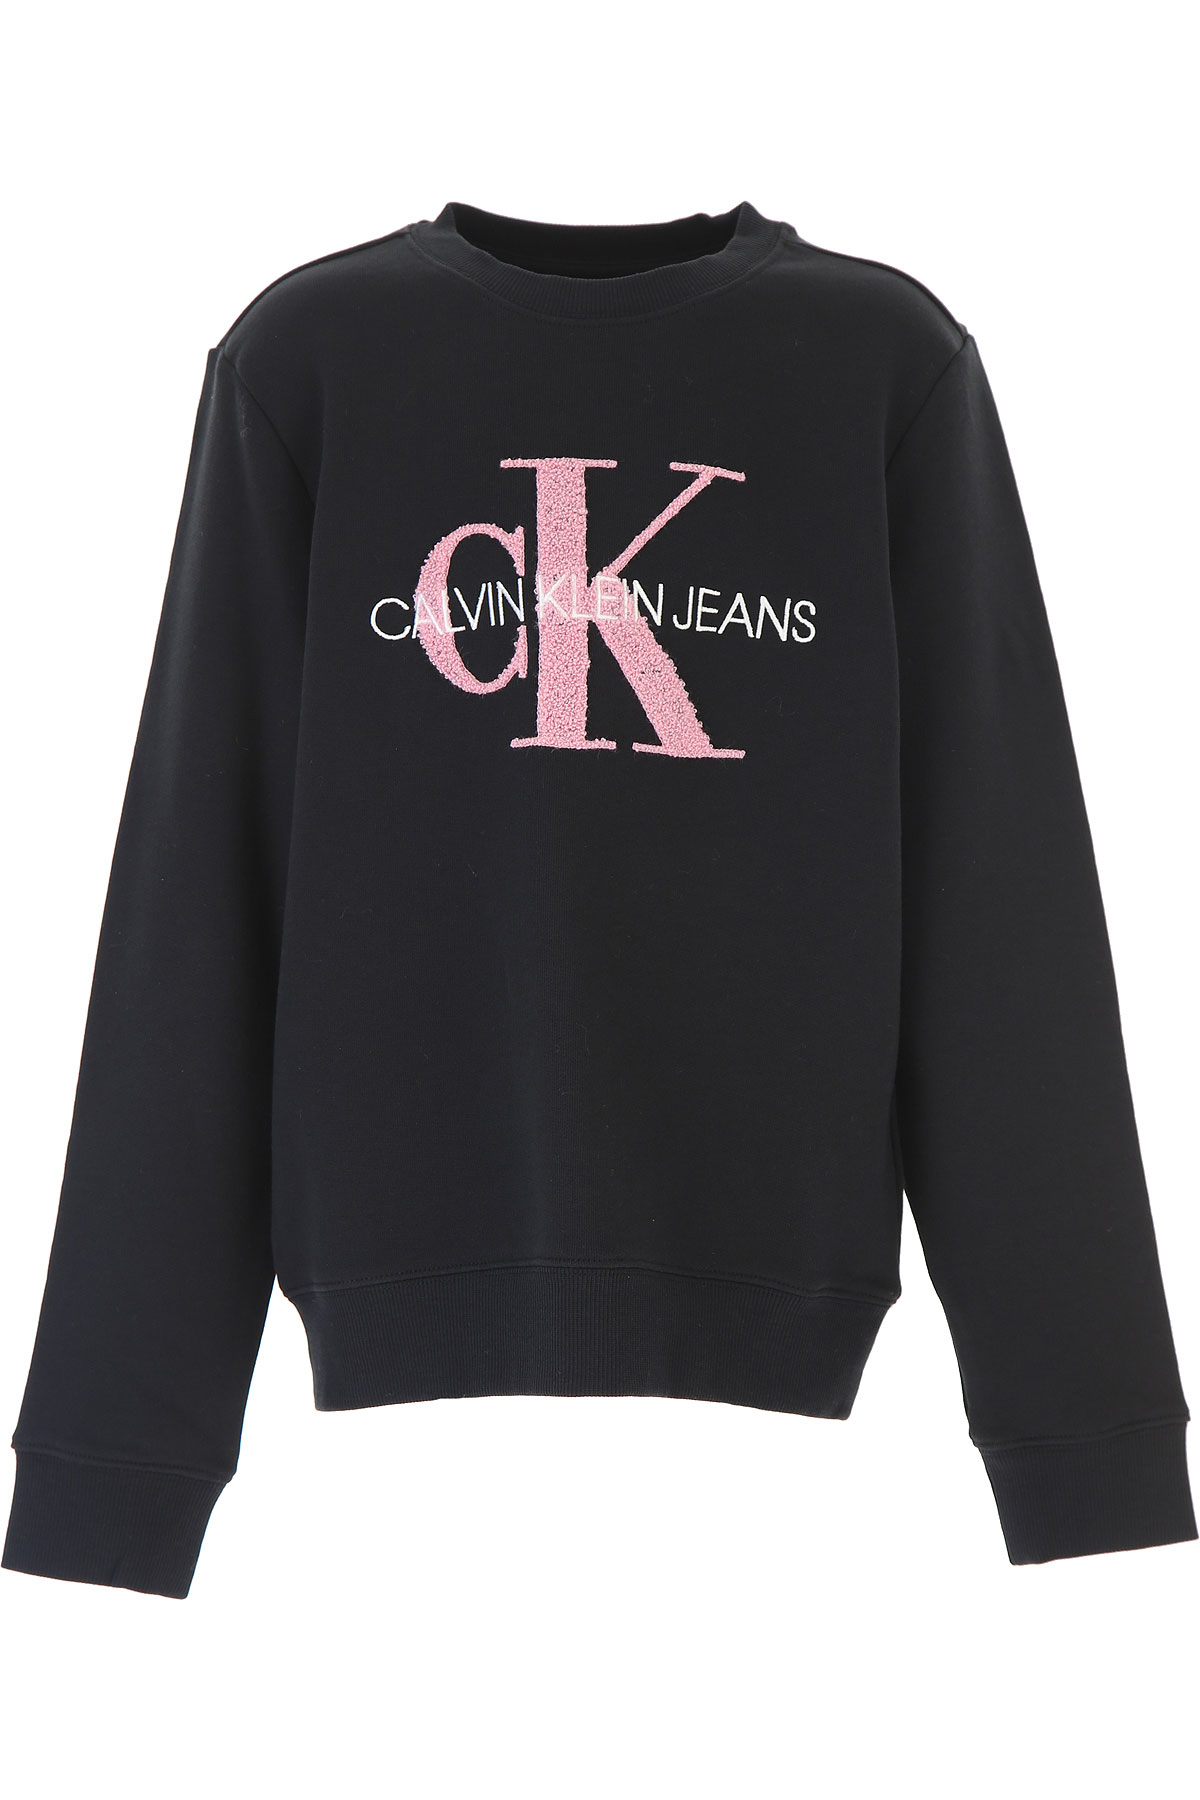 Calvin Klein Kinder Sweatshirt & Kapuzenpullover für Mädchen Günstig im Sale, Schwarz, Baumwolle, 2017, 10Y 12Y 14Y 16Y 4Y 6Y 8Y